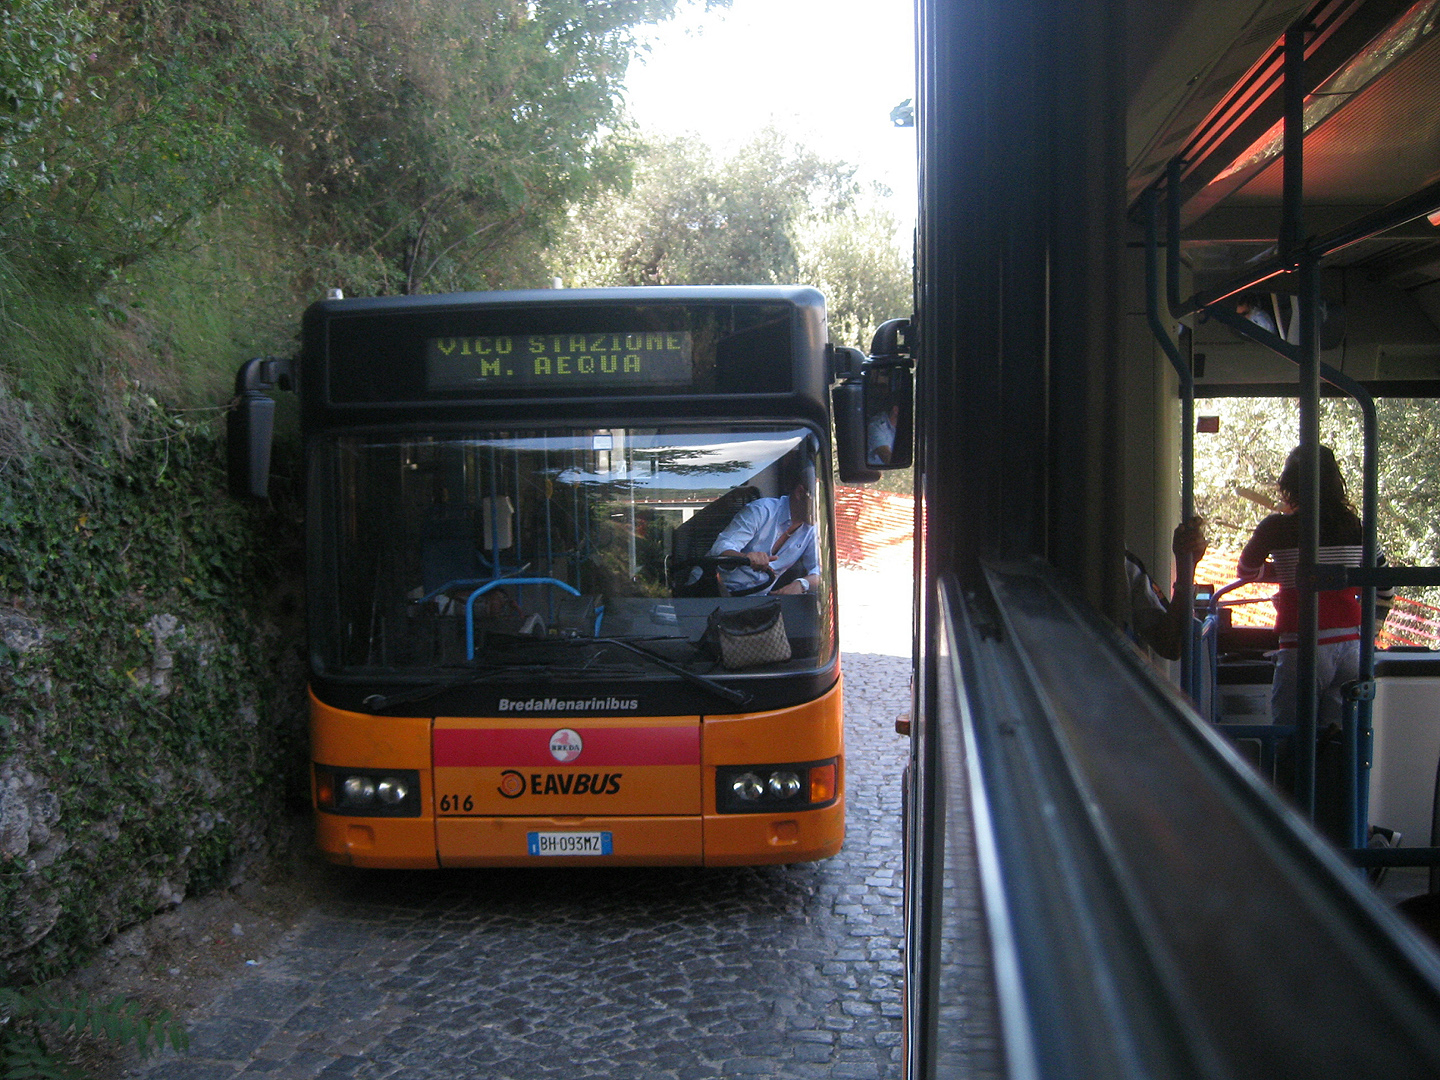 Twee bussen passeren elkaar op smalle weg.; Two busses passing on a narrow road.